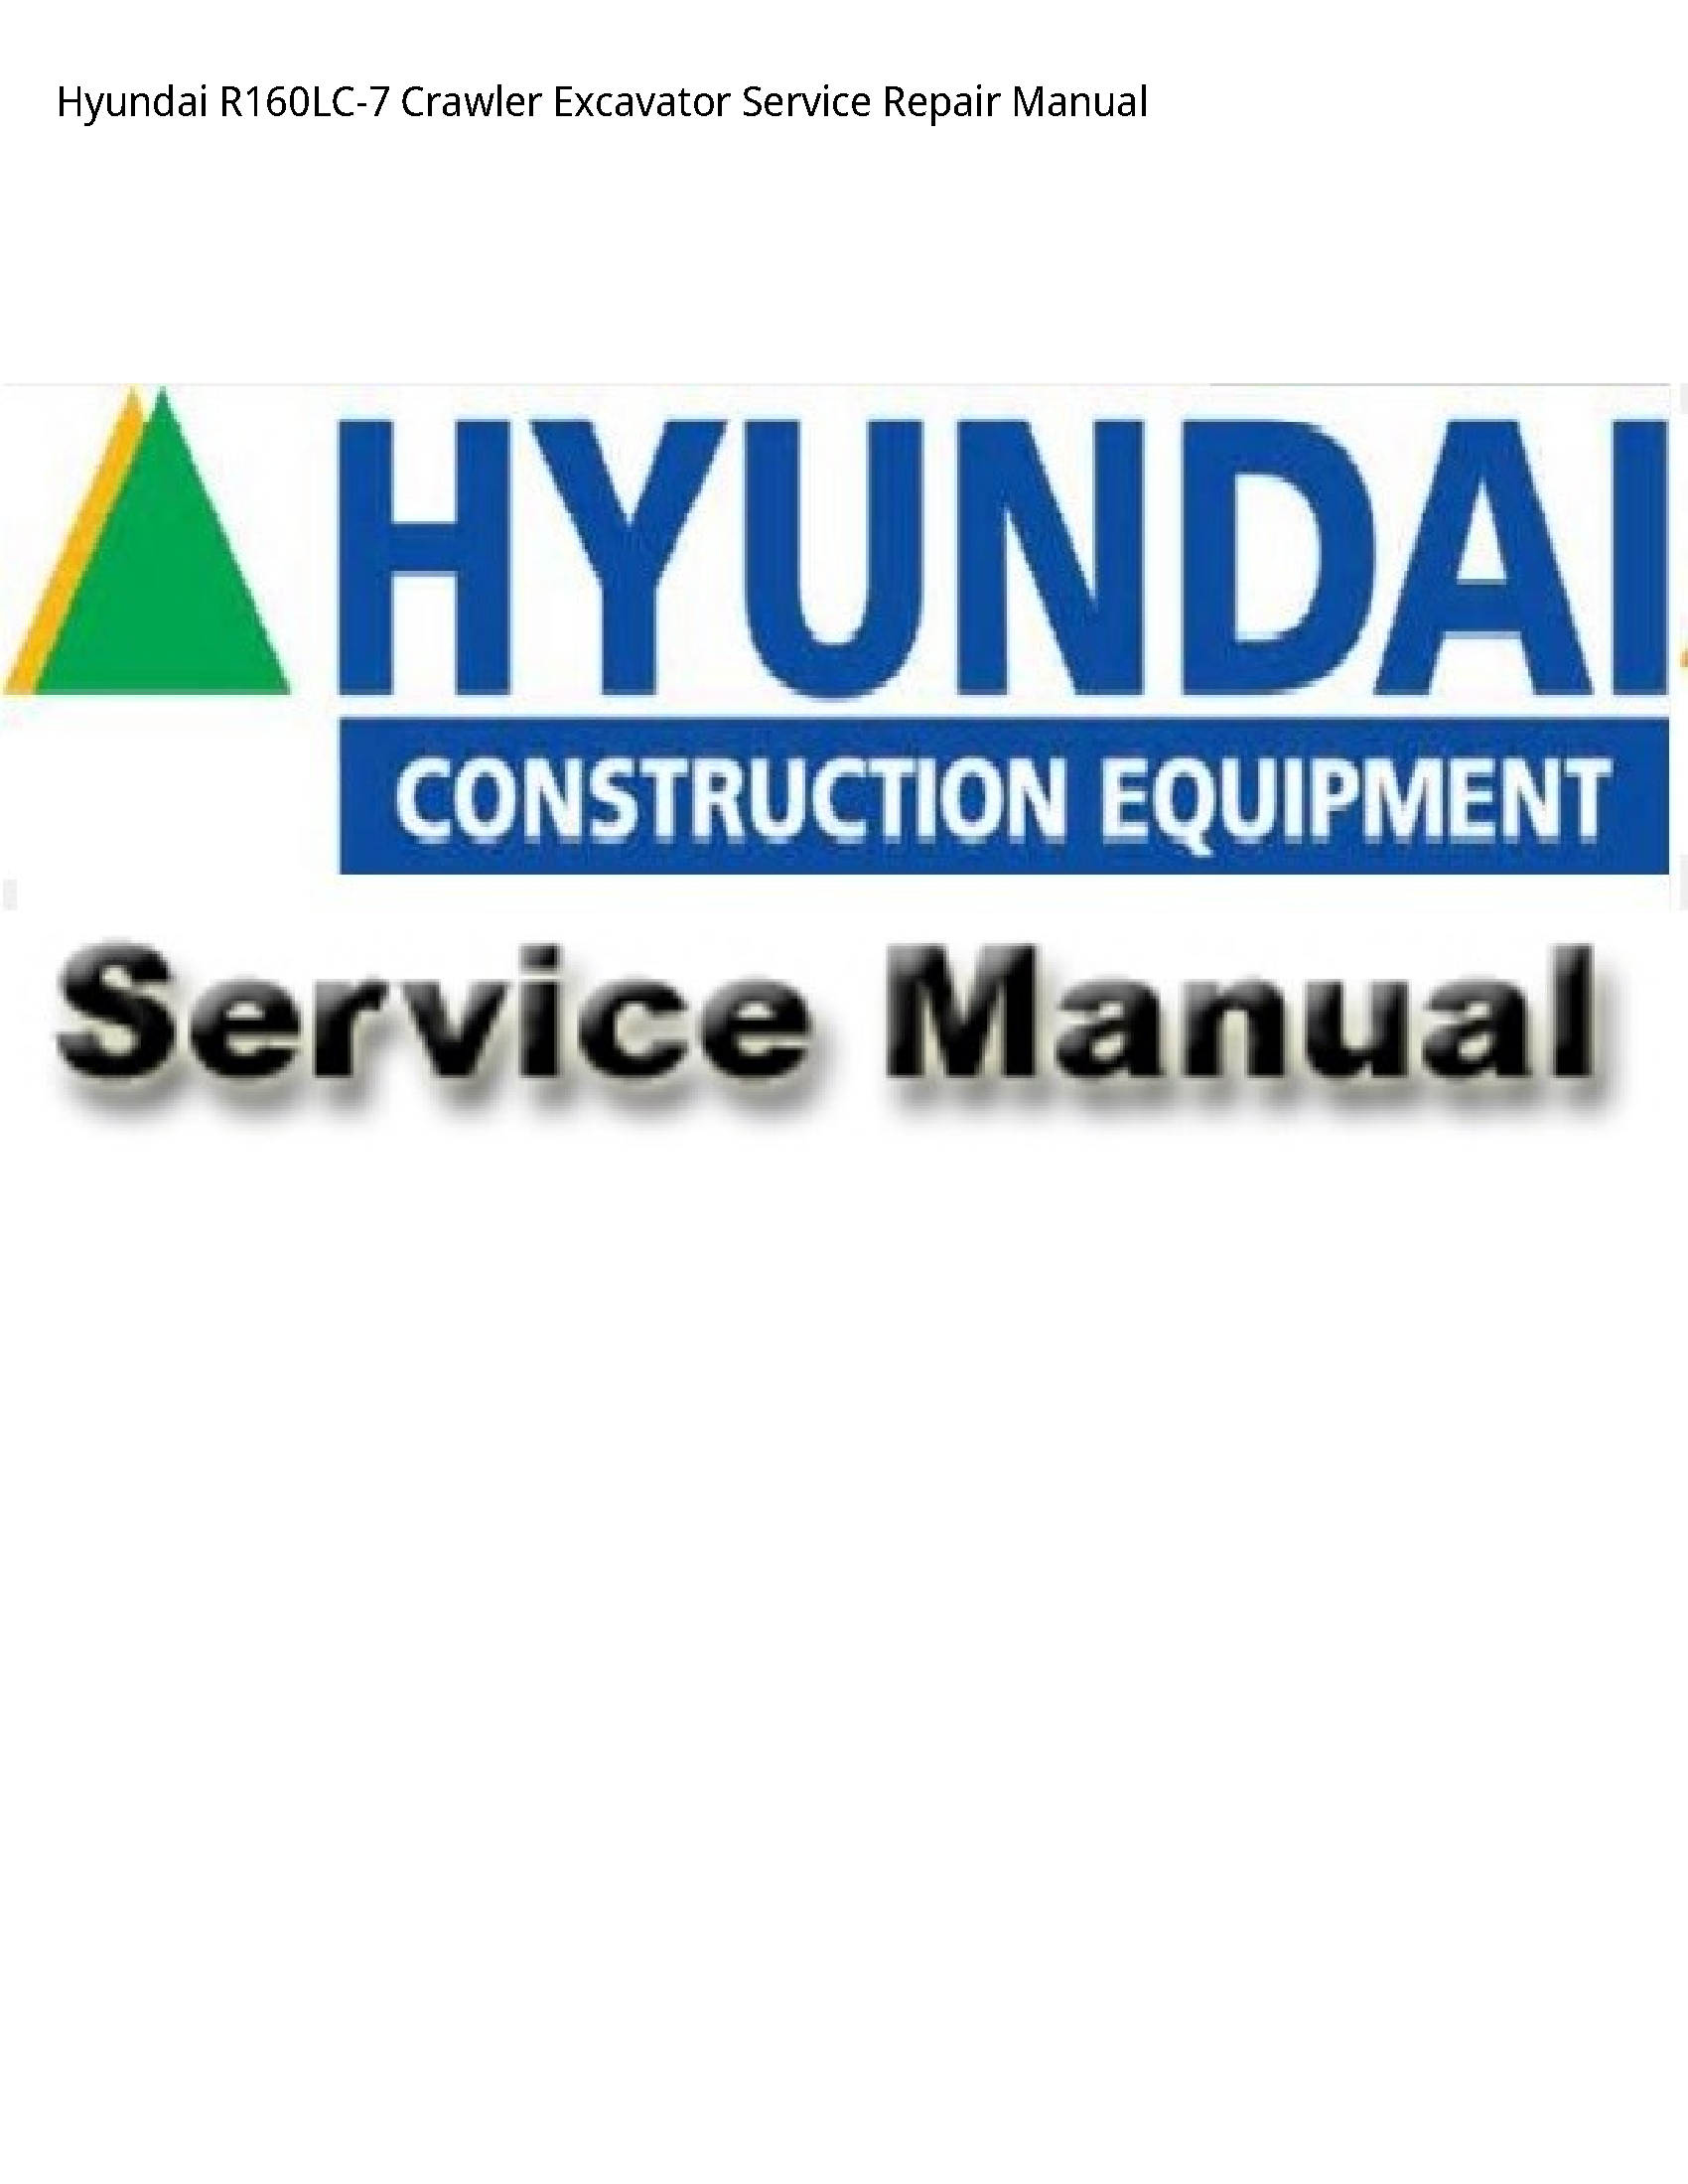 Hyundai R160LC-7 Crawler Excavator manual